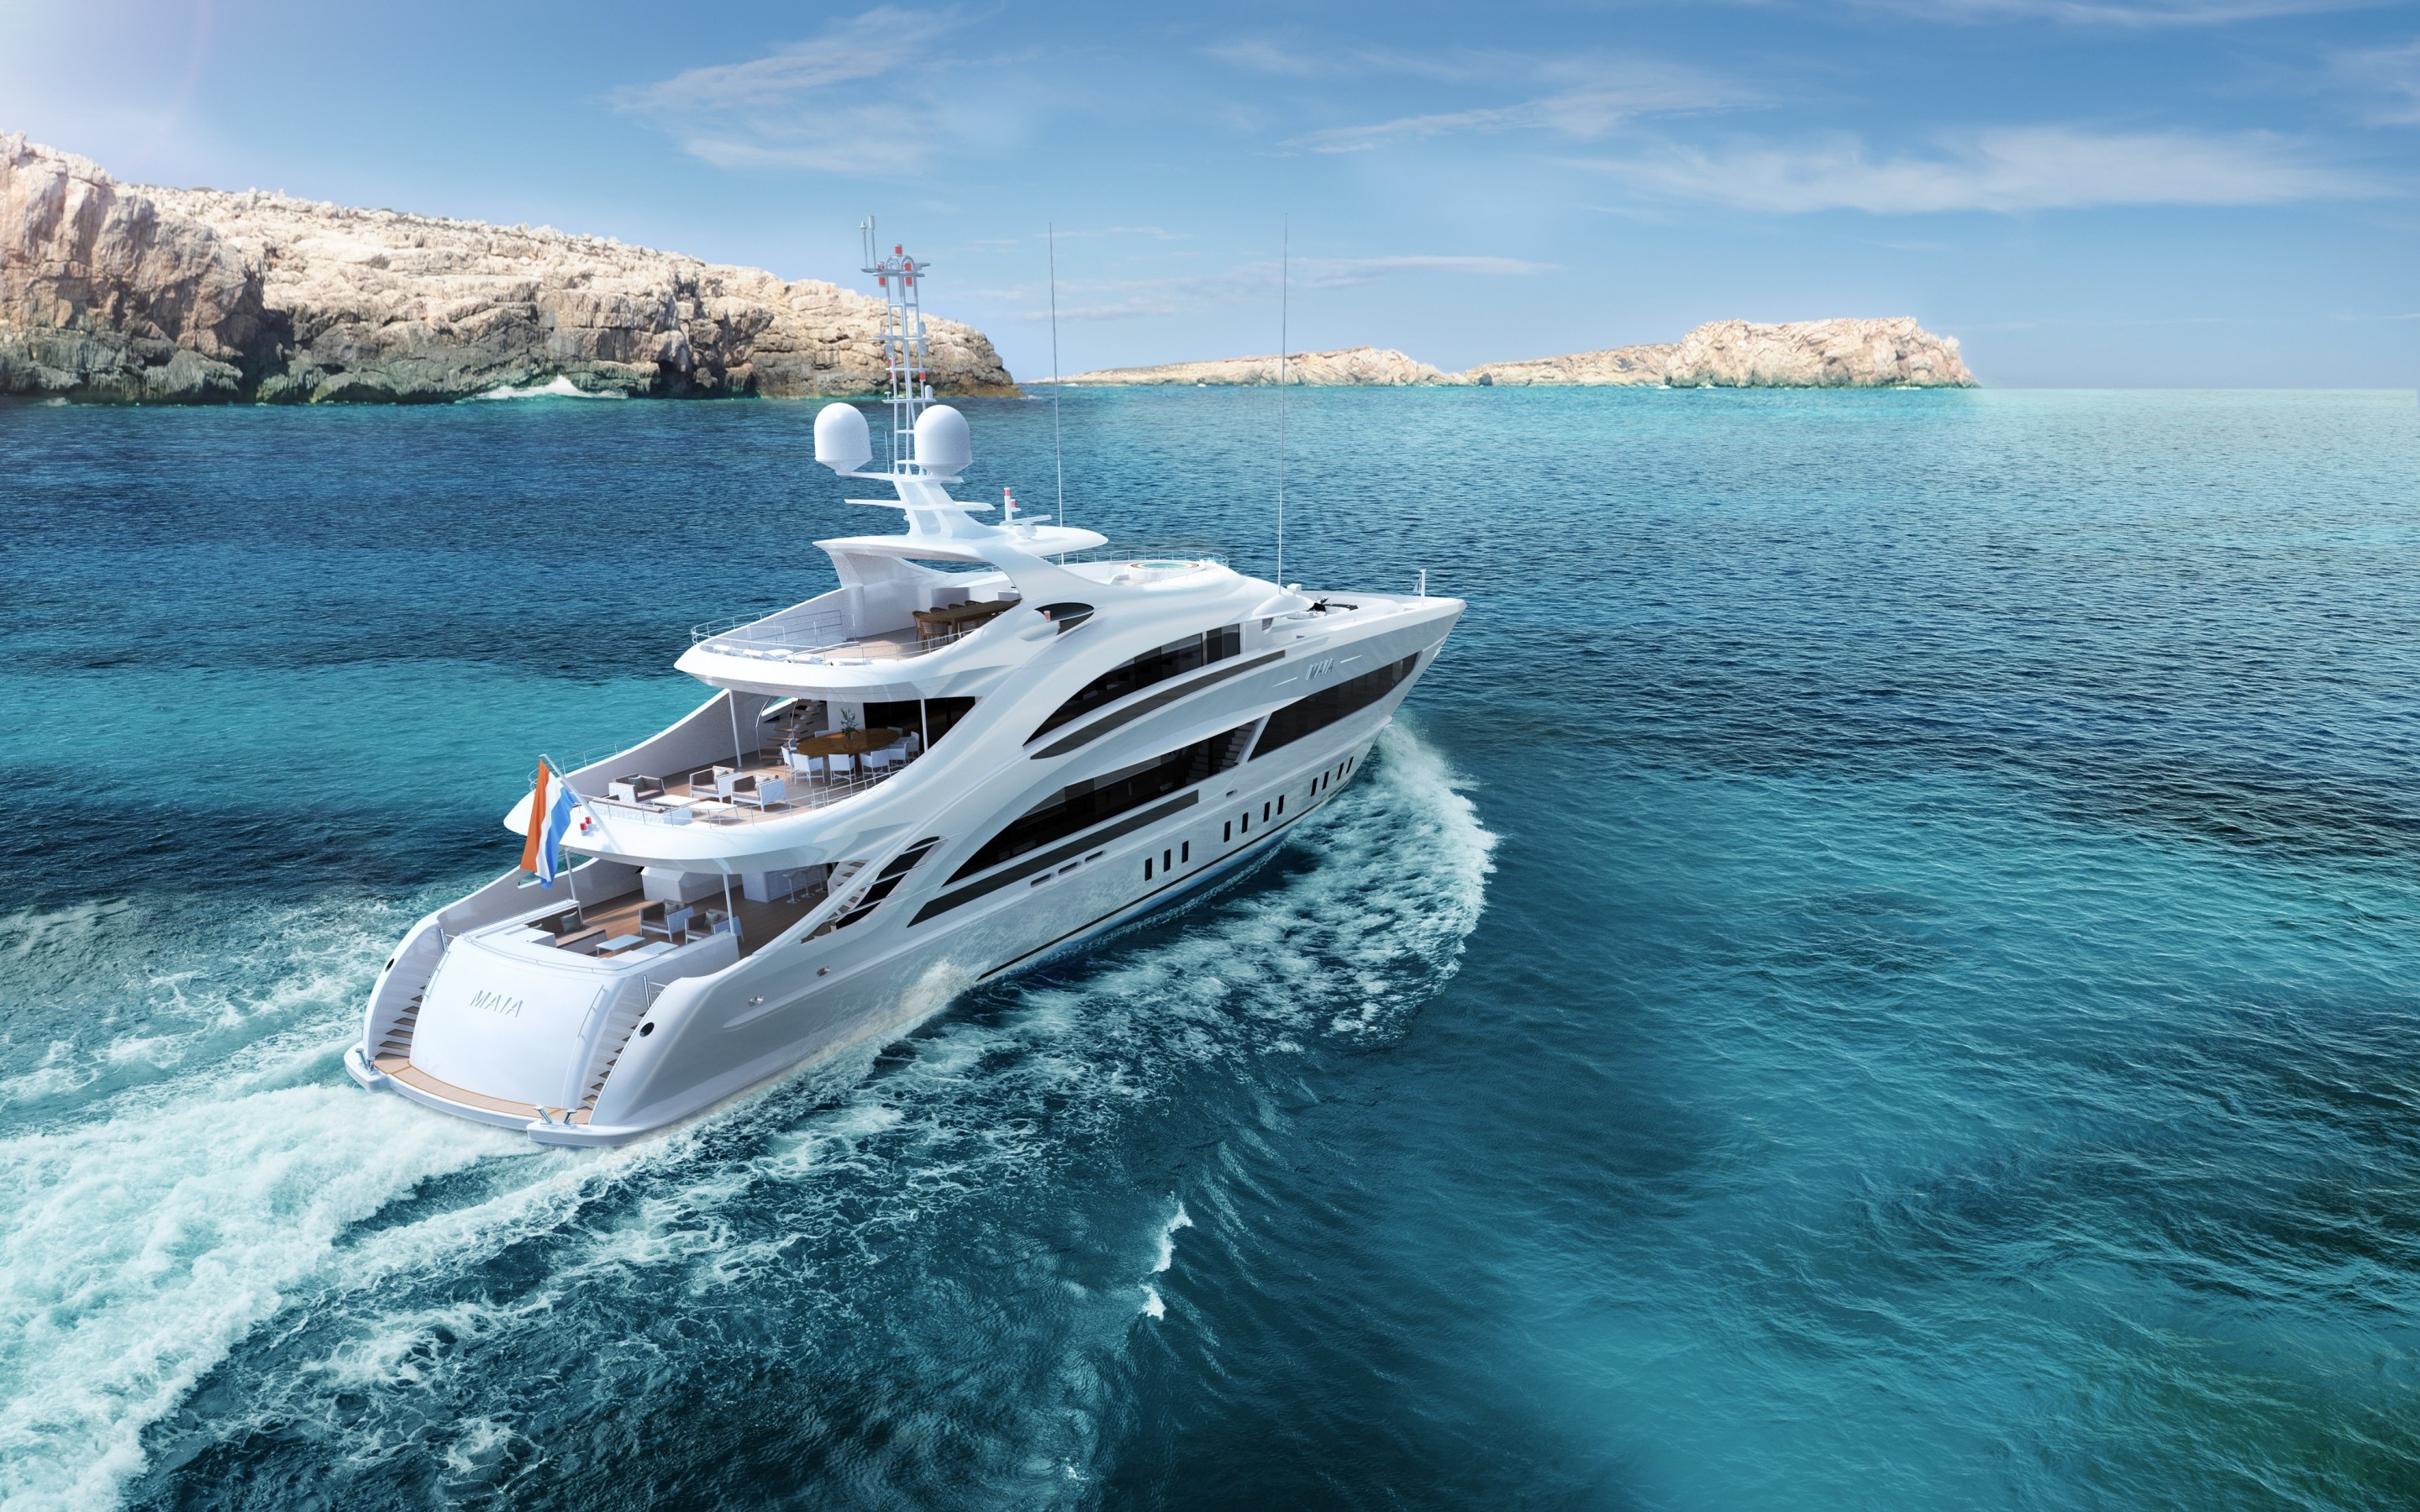 Yacht: Luxury white boat, Maia, Bay, Seascape, Pleasure cruising. 2880x1800 HD Background.